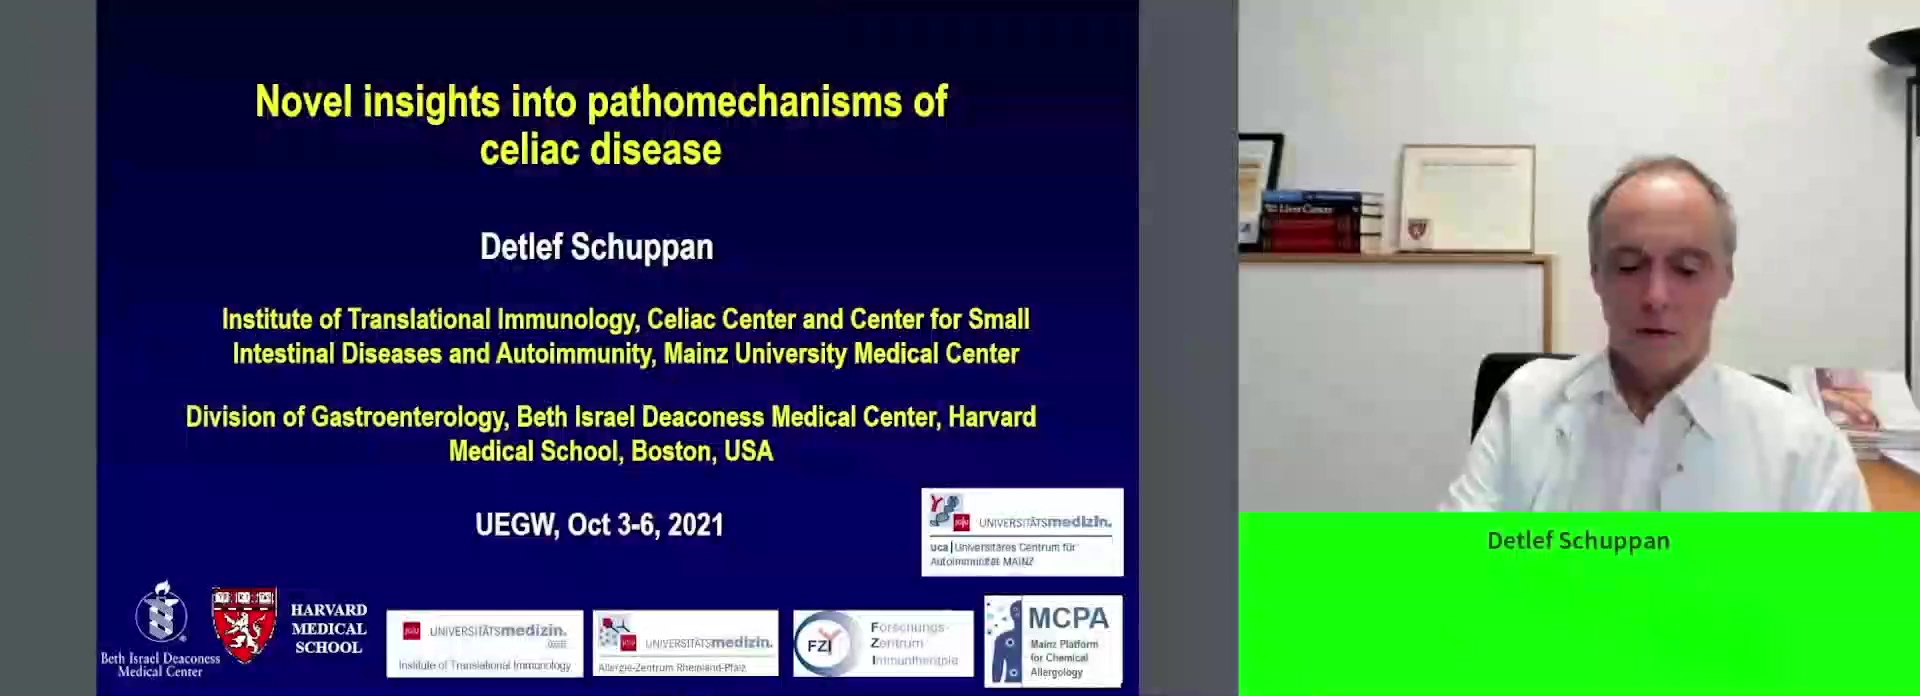 Novel insights into pathomechanisms of coealiac disease